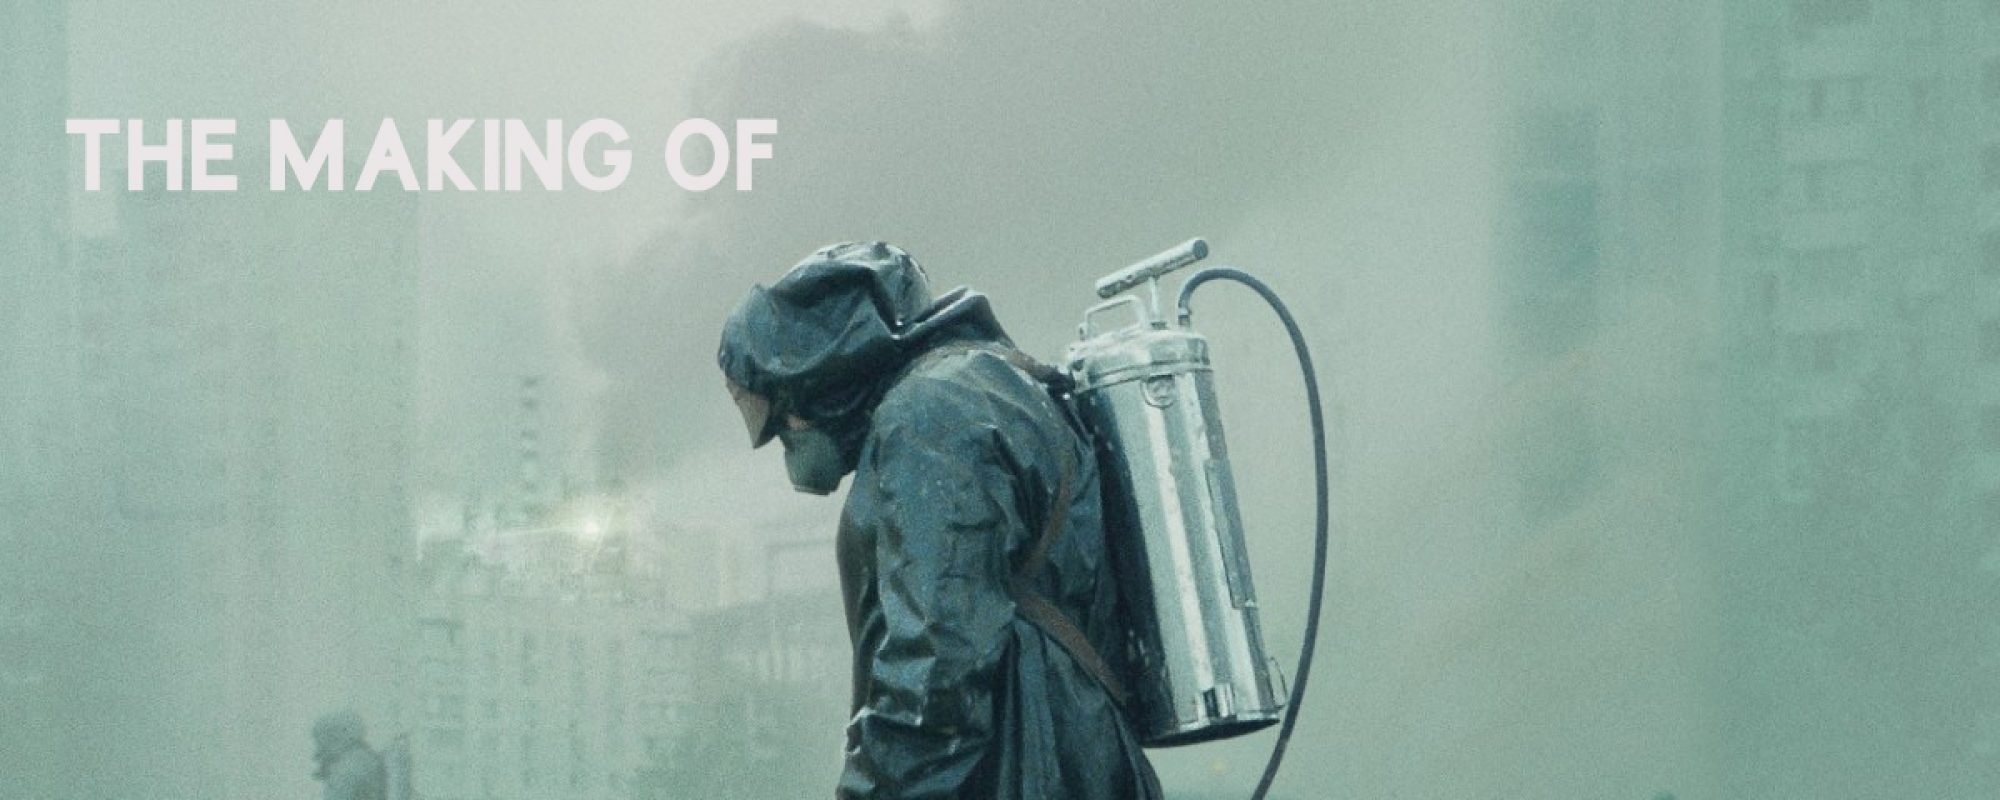 Chernobyl: Jakob Ihre, FSF — Adding a LUT to Create Reality